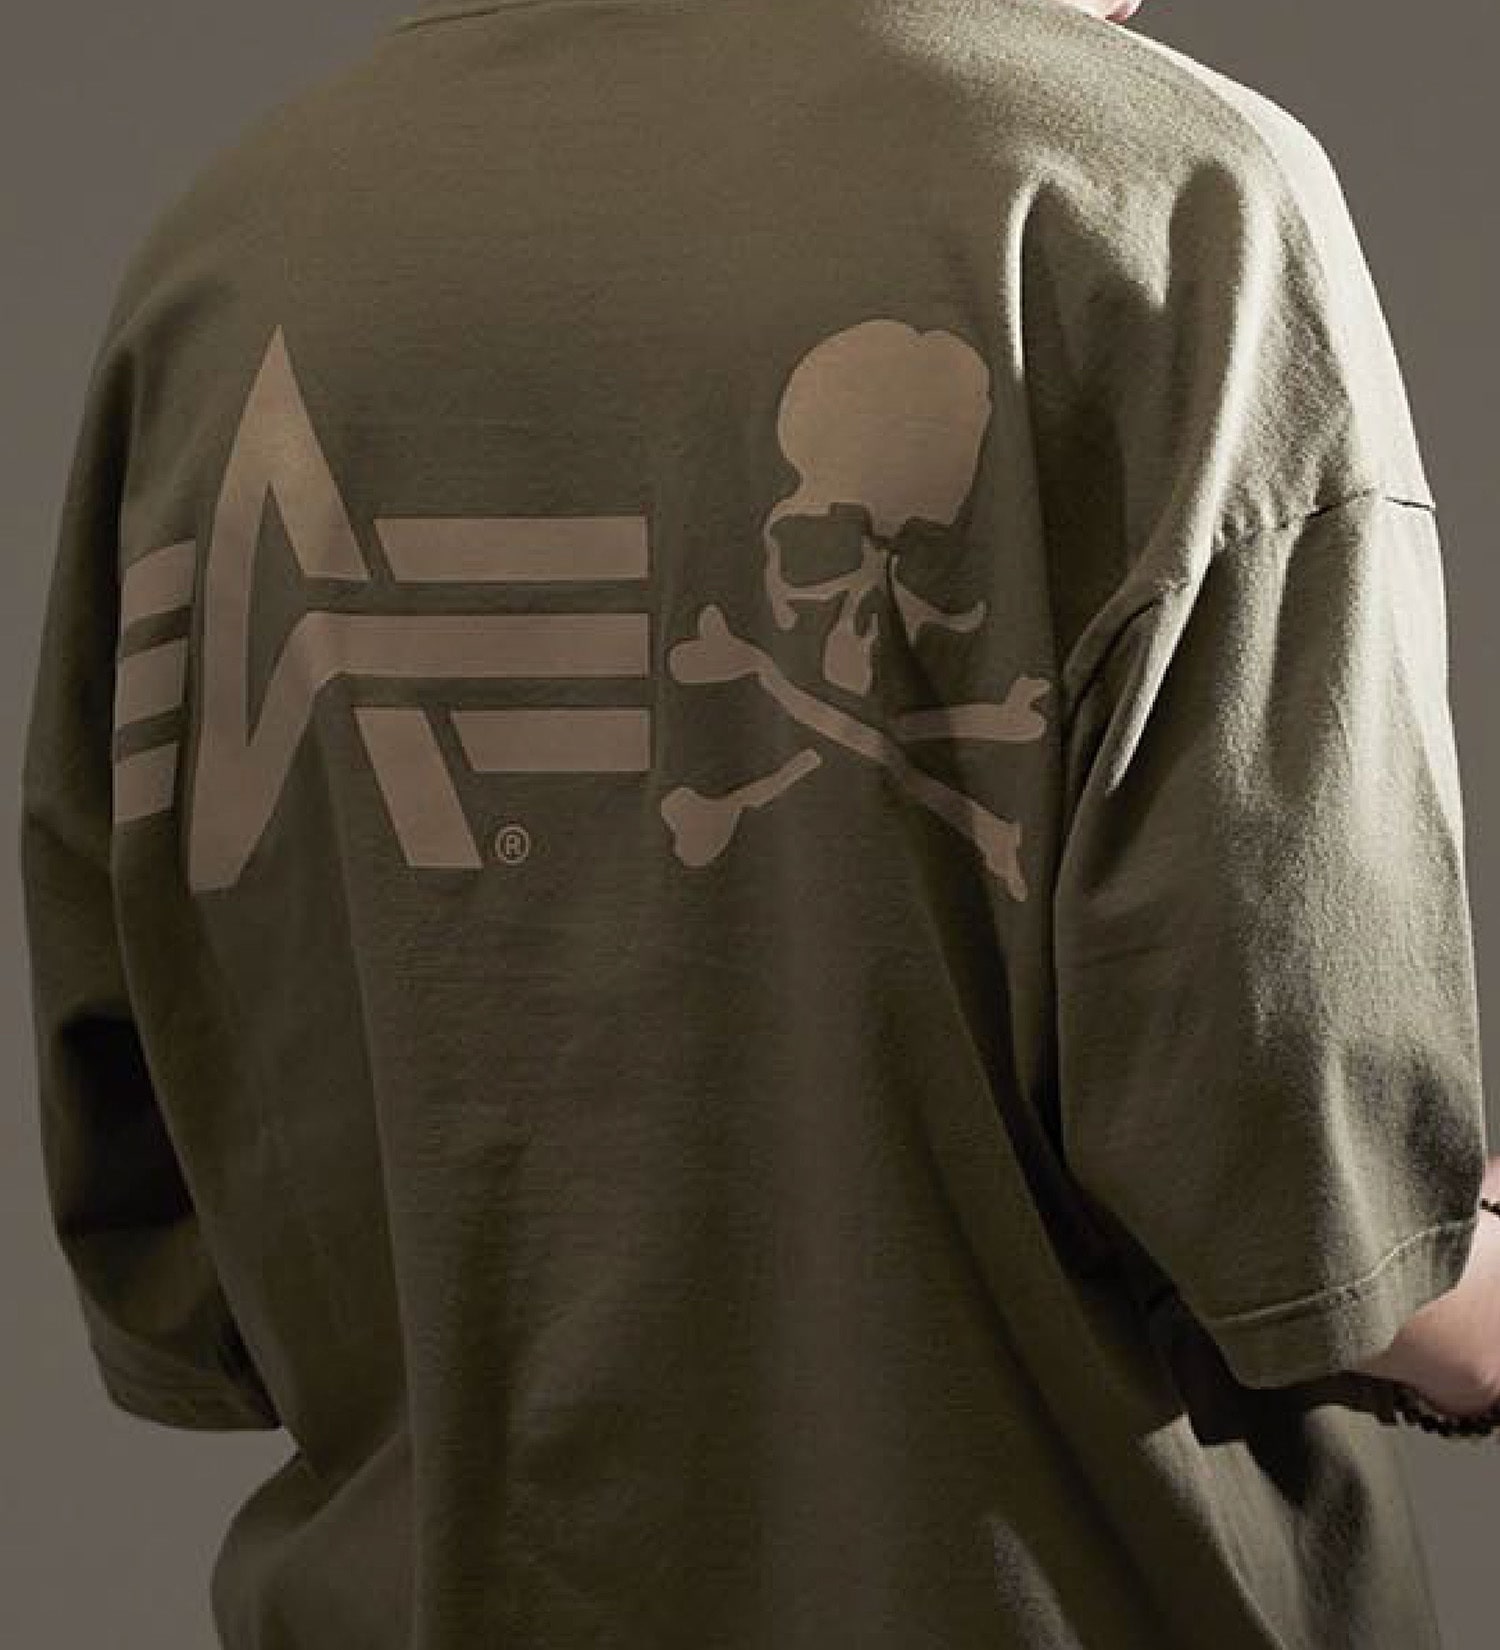 ALPHA(アルファ)の【MASTERMIND x ALPHA】ユーティリティーポケット半袖Tシャツ|トップス/Tシャツ/カットソー/メンズ|グリーン